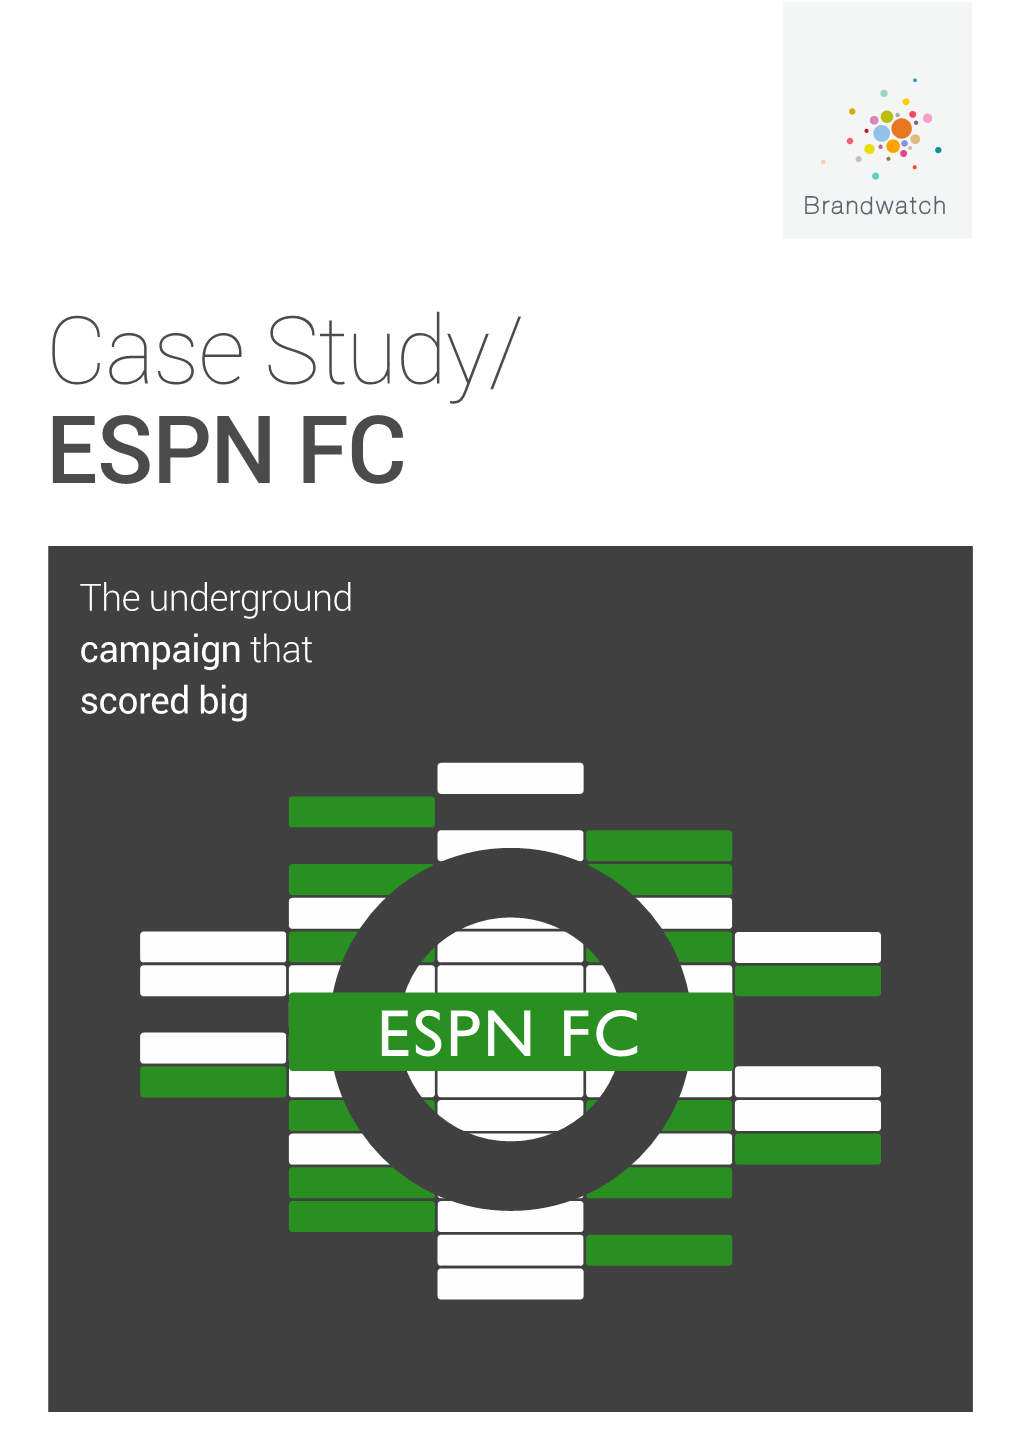 Case Study/ ESPN FC